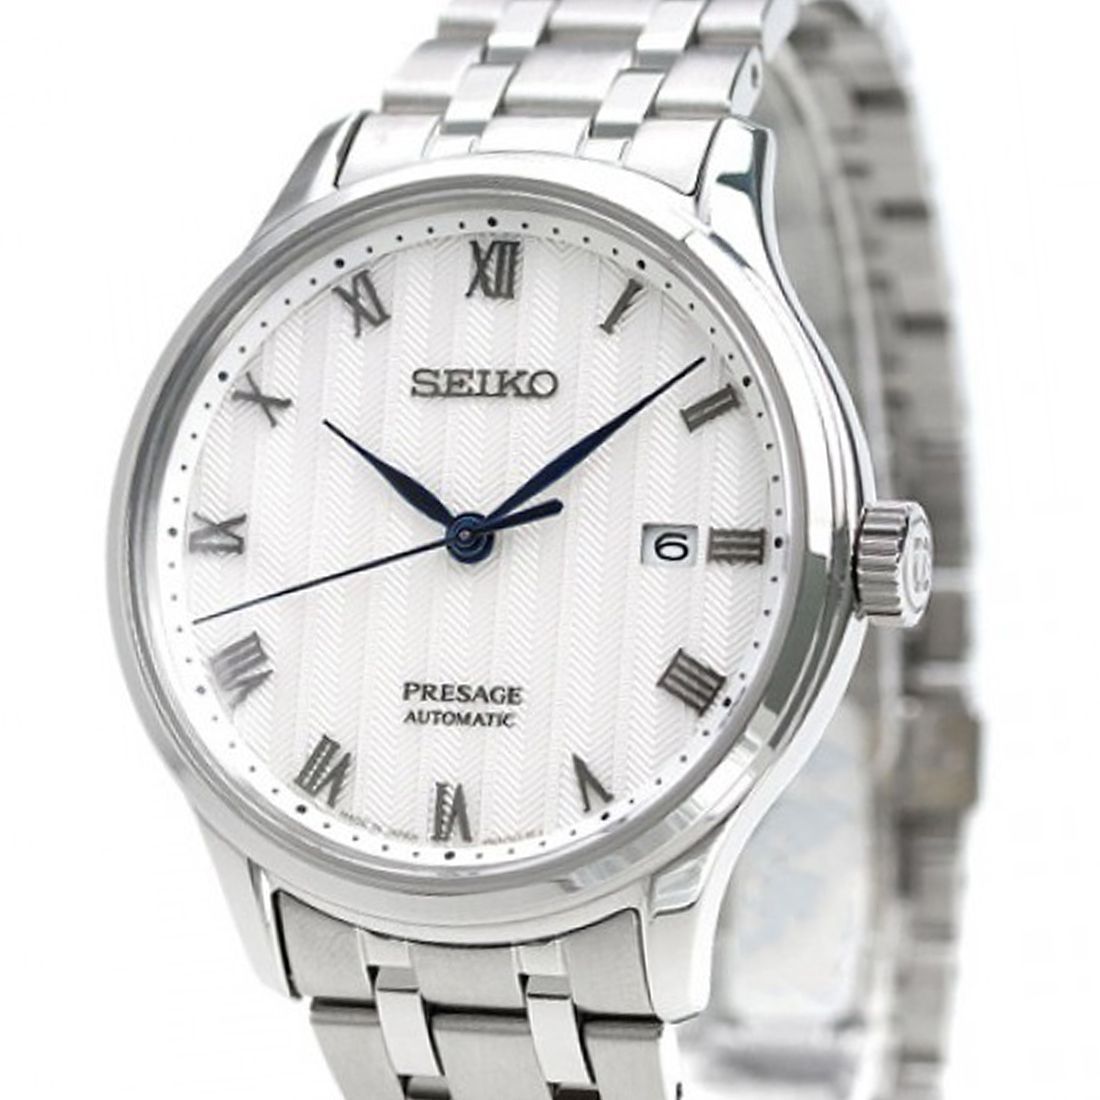 Seiko Presage Automatic 23 Jewels JDM Watch SARY097 (BACKORDER) -Seiko